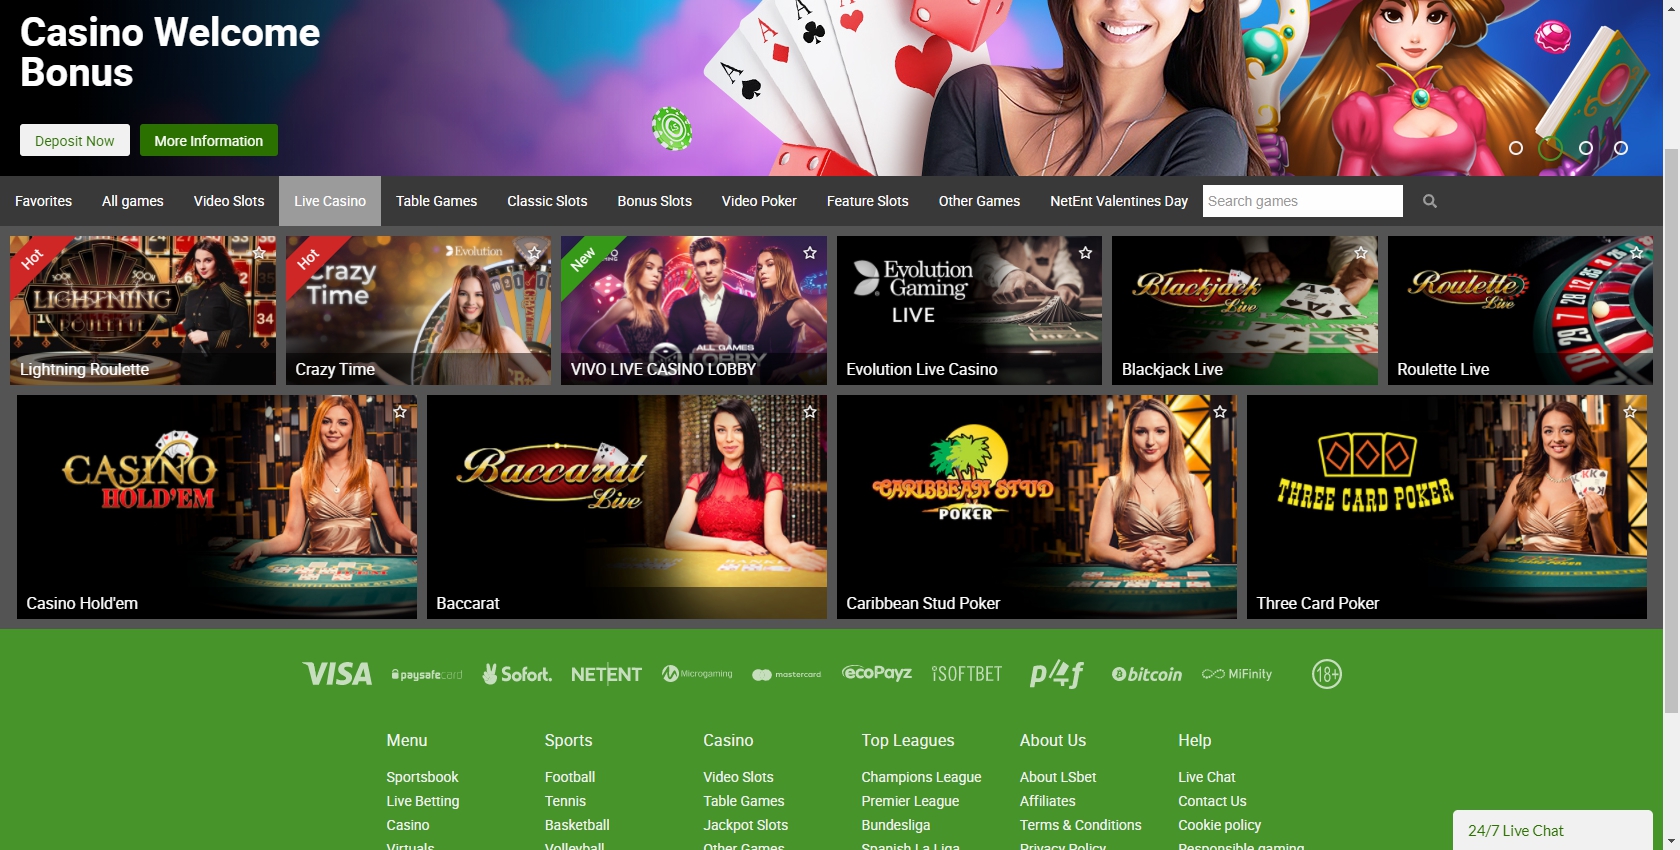 LS Bet Casino Live Dealer Games